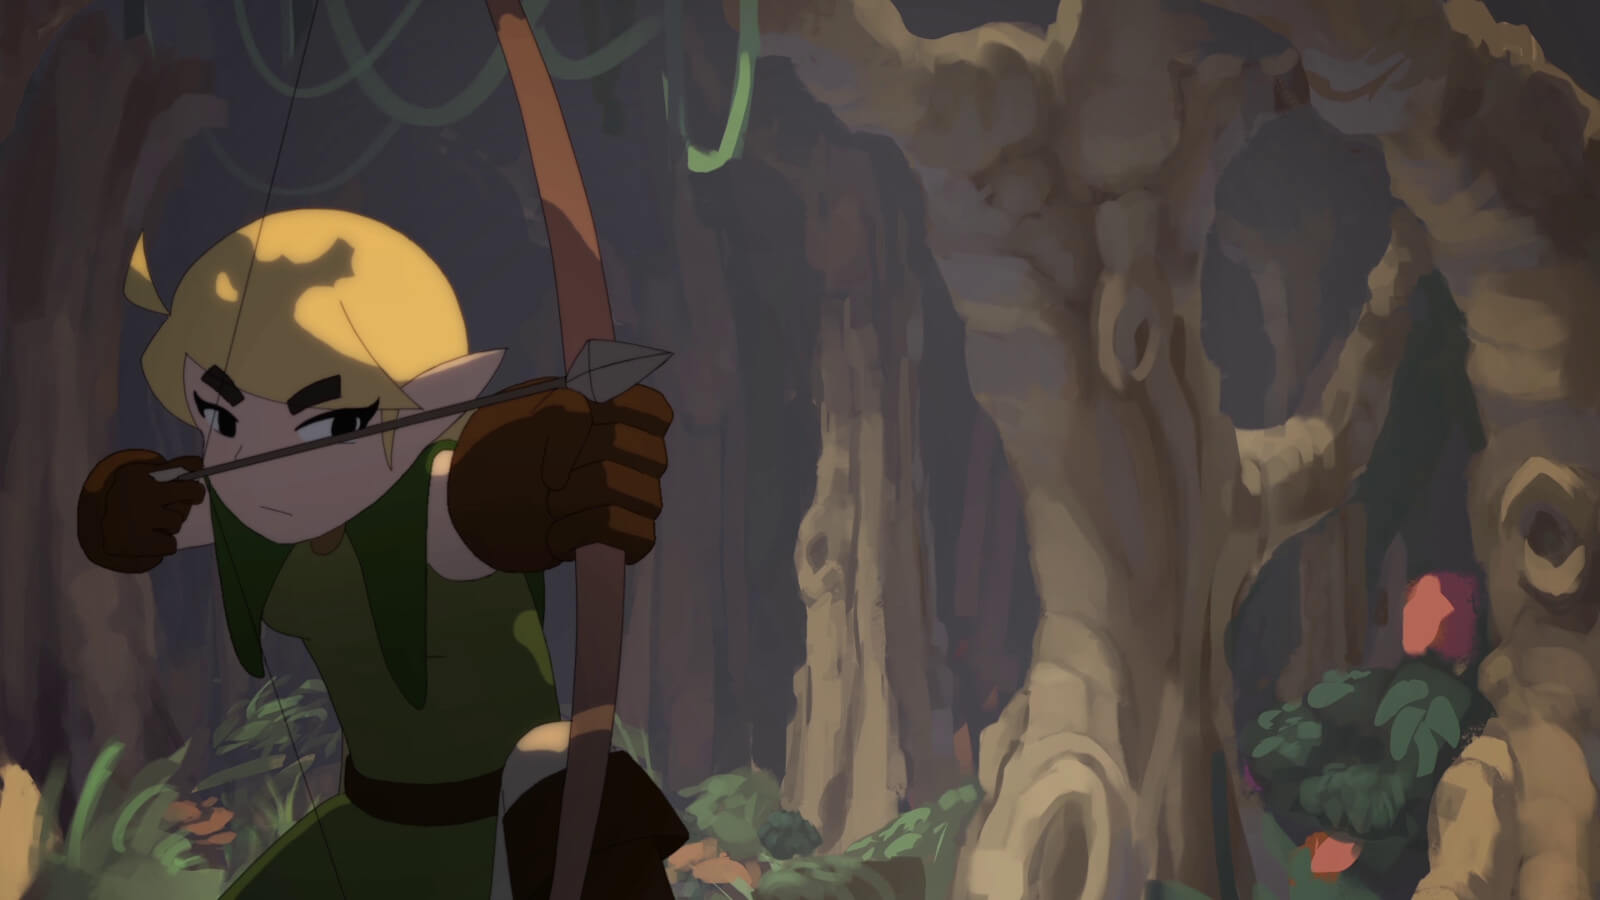 Elf with a bow and arrow